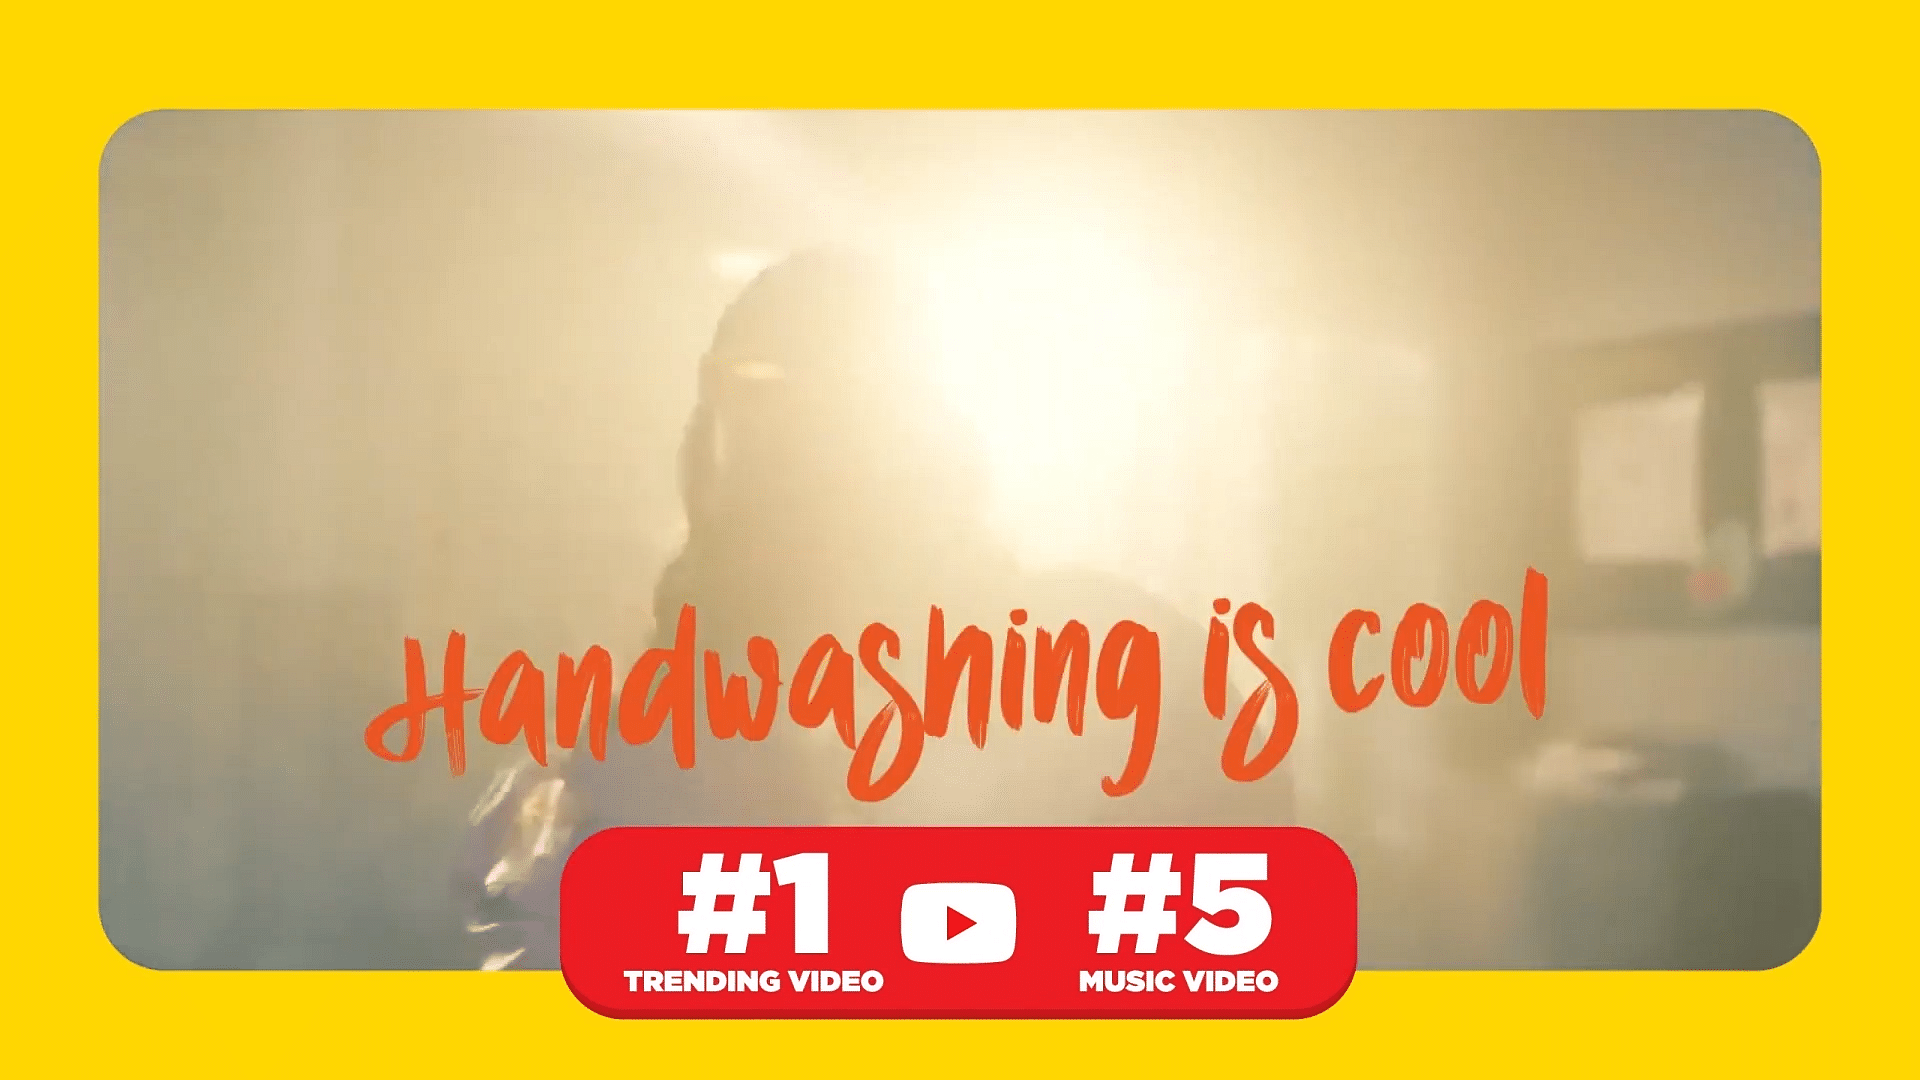 Savlon's #HandwashLegends campaign promotes handwashing as a cool ...